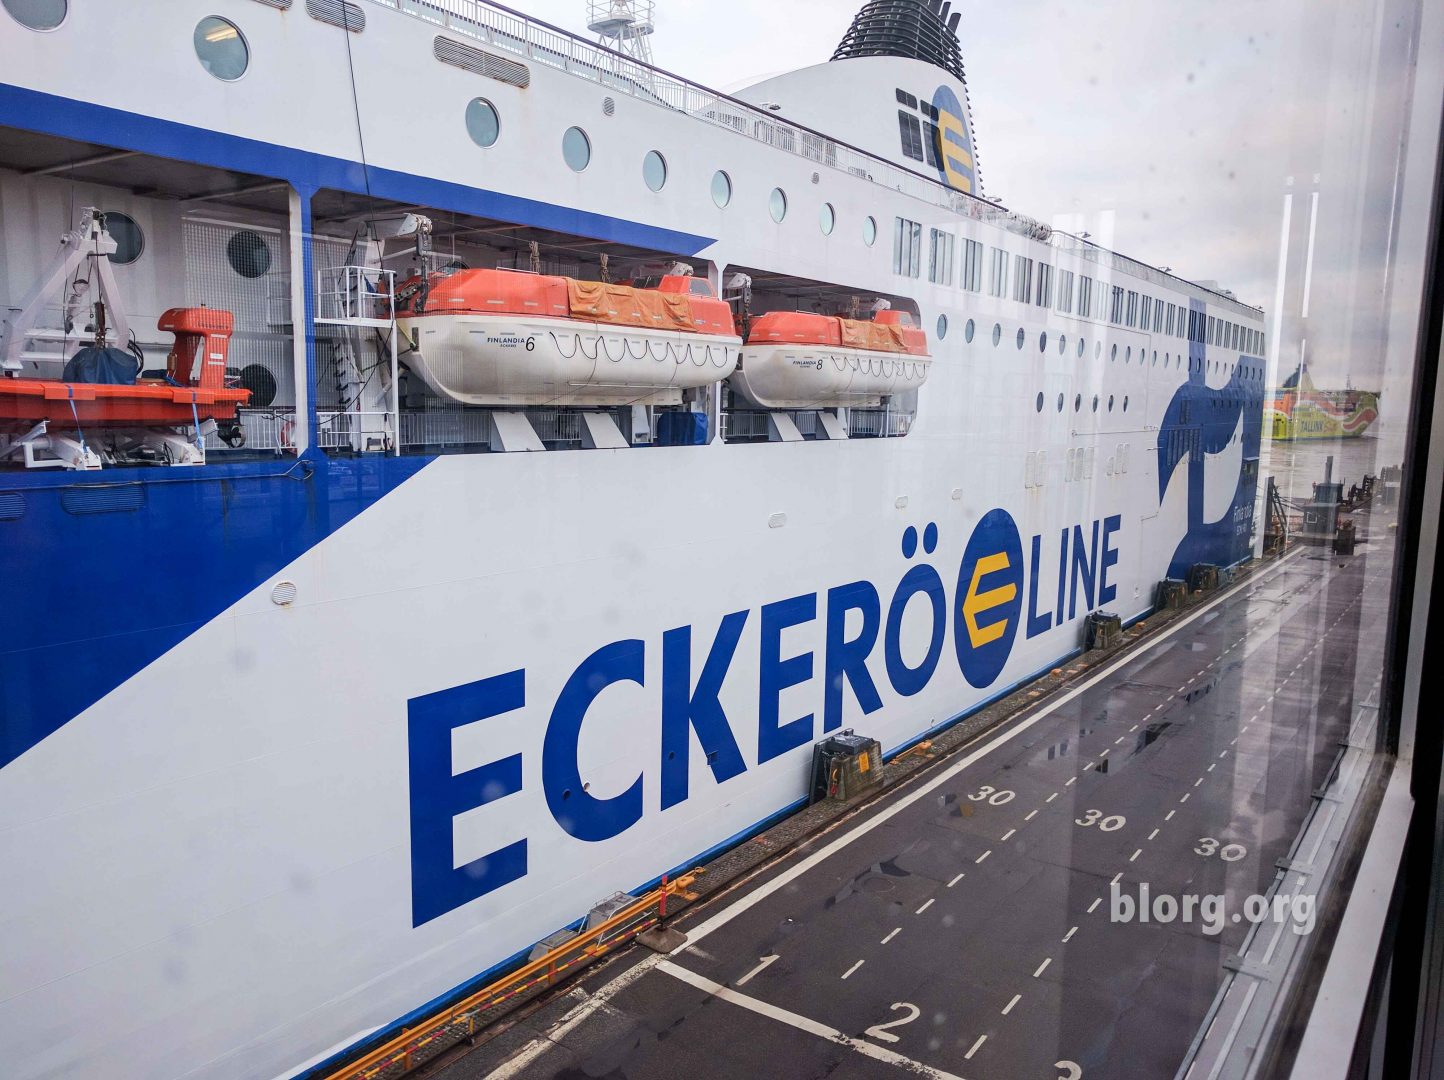 Helsinki to Tallinn Ferry Review - Eckero | blorg